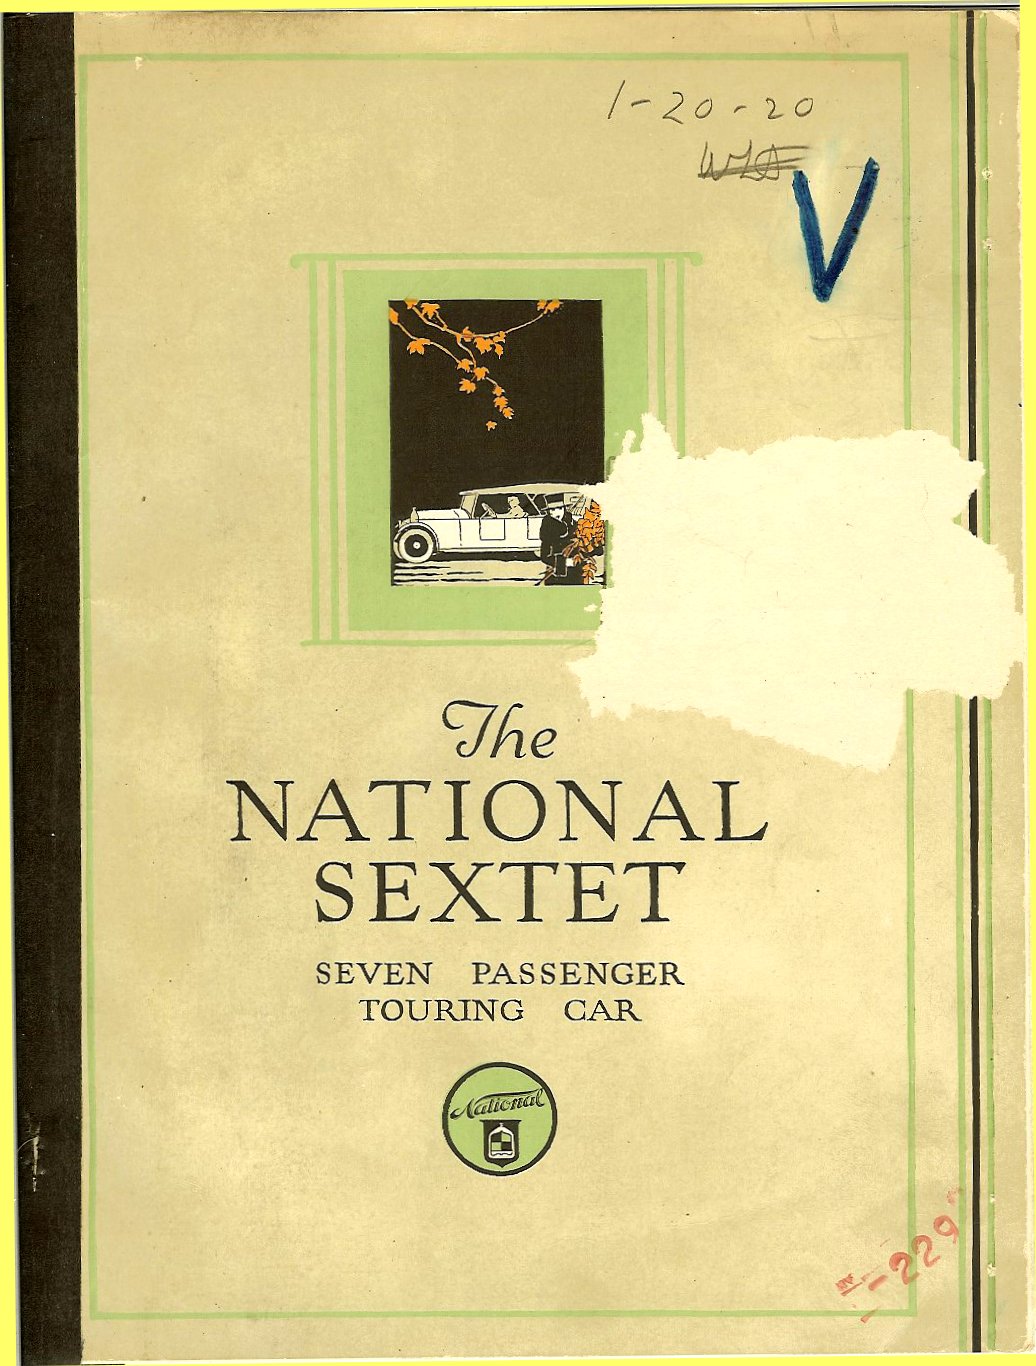 1920 National Sextet-01